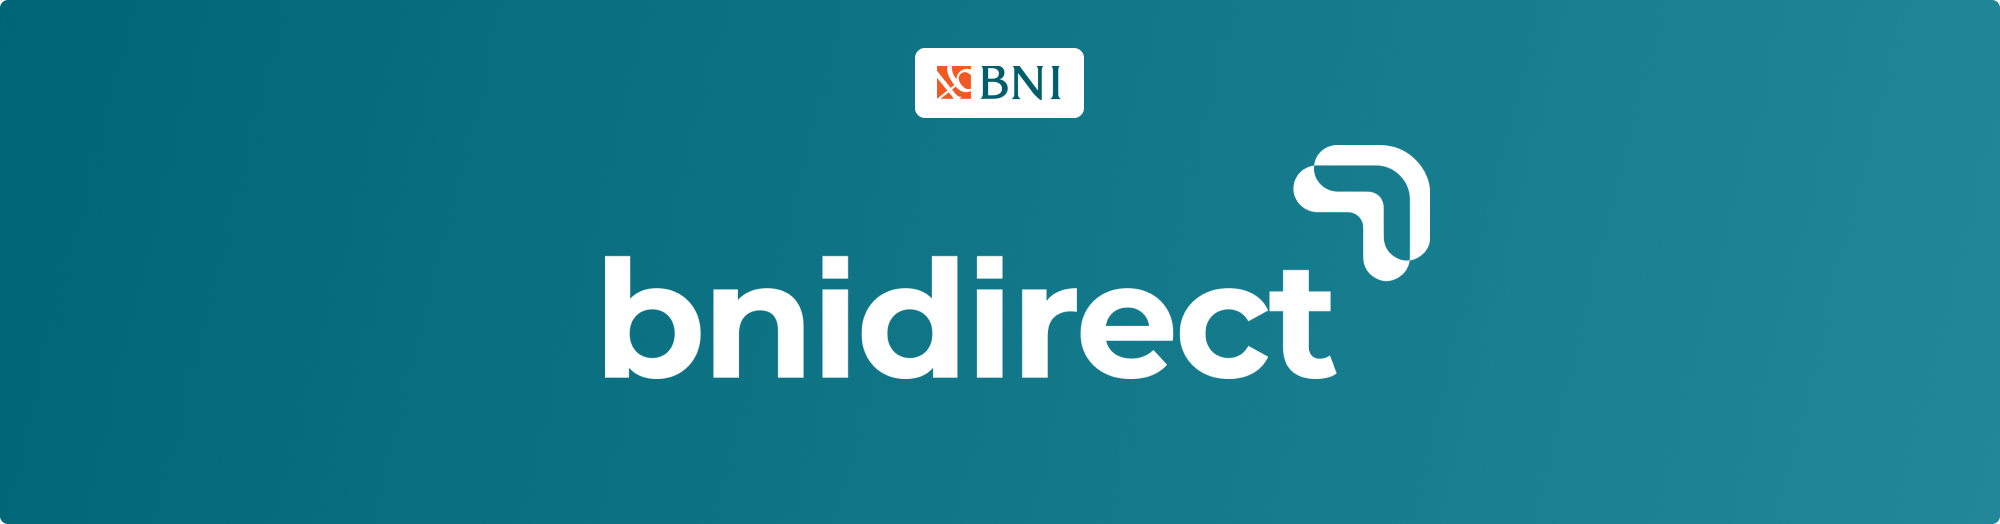 BNI Direct